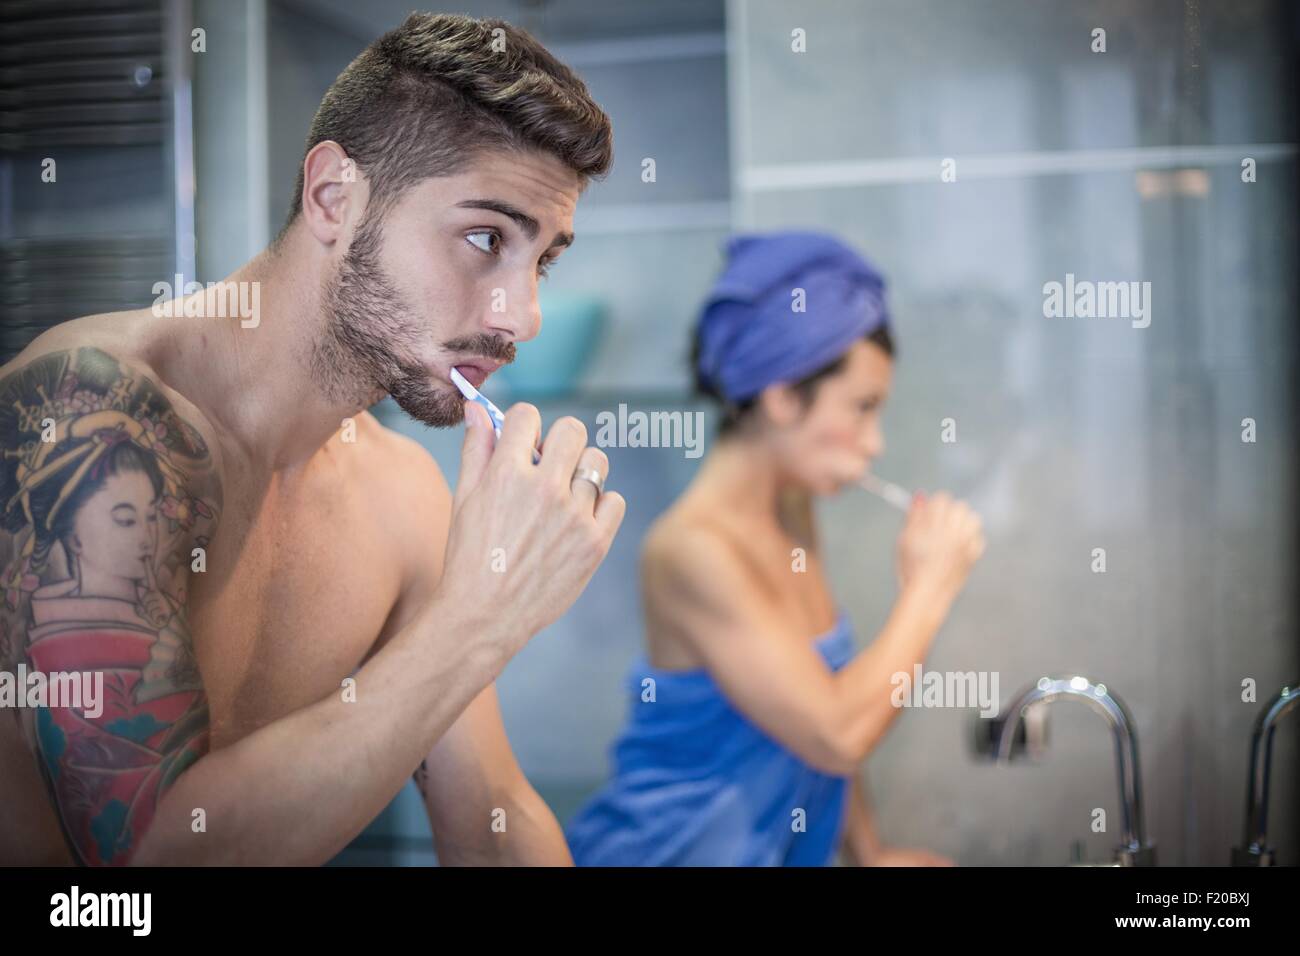 Young couple brushing teeth in bathroom Stock Photo